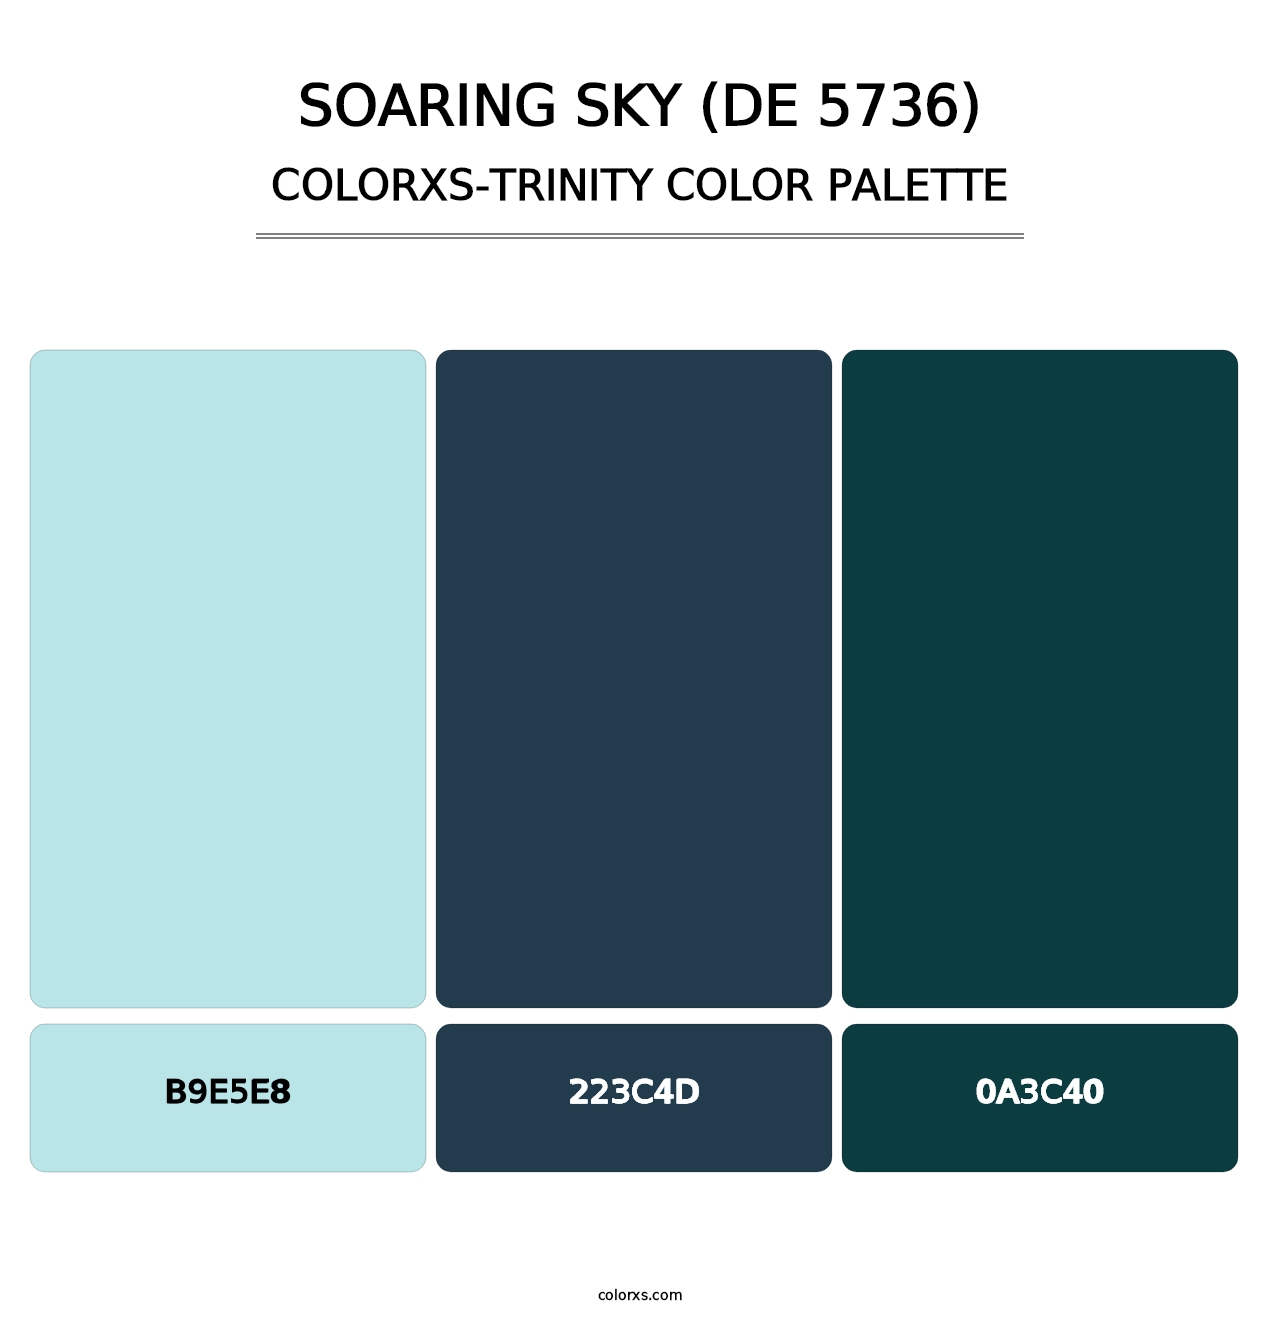 Soaring Sky (DE 5736) - Colorxs Trinity Palette